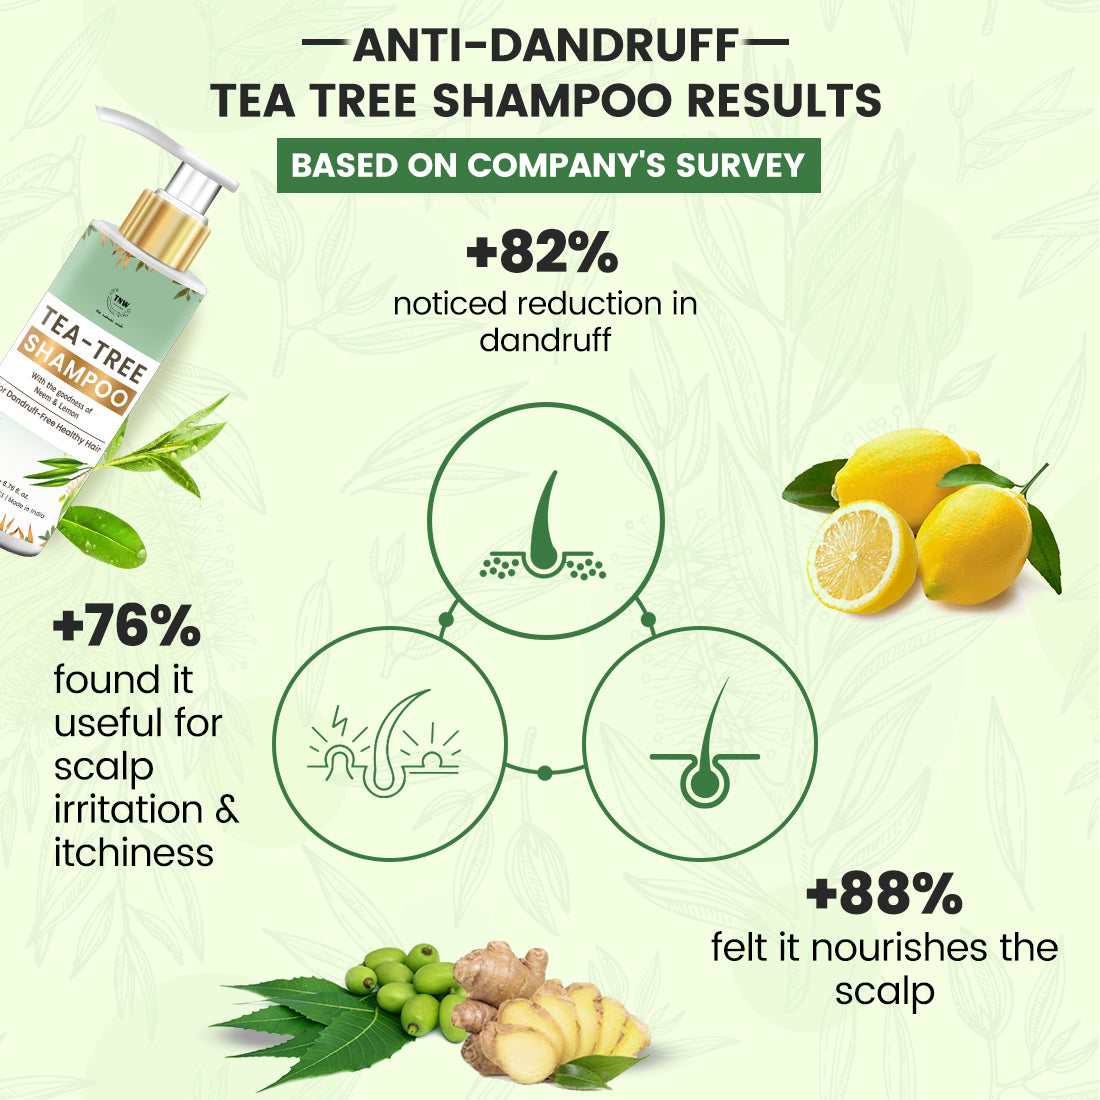 Tea Tree Shampoo Results